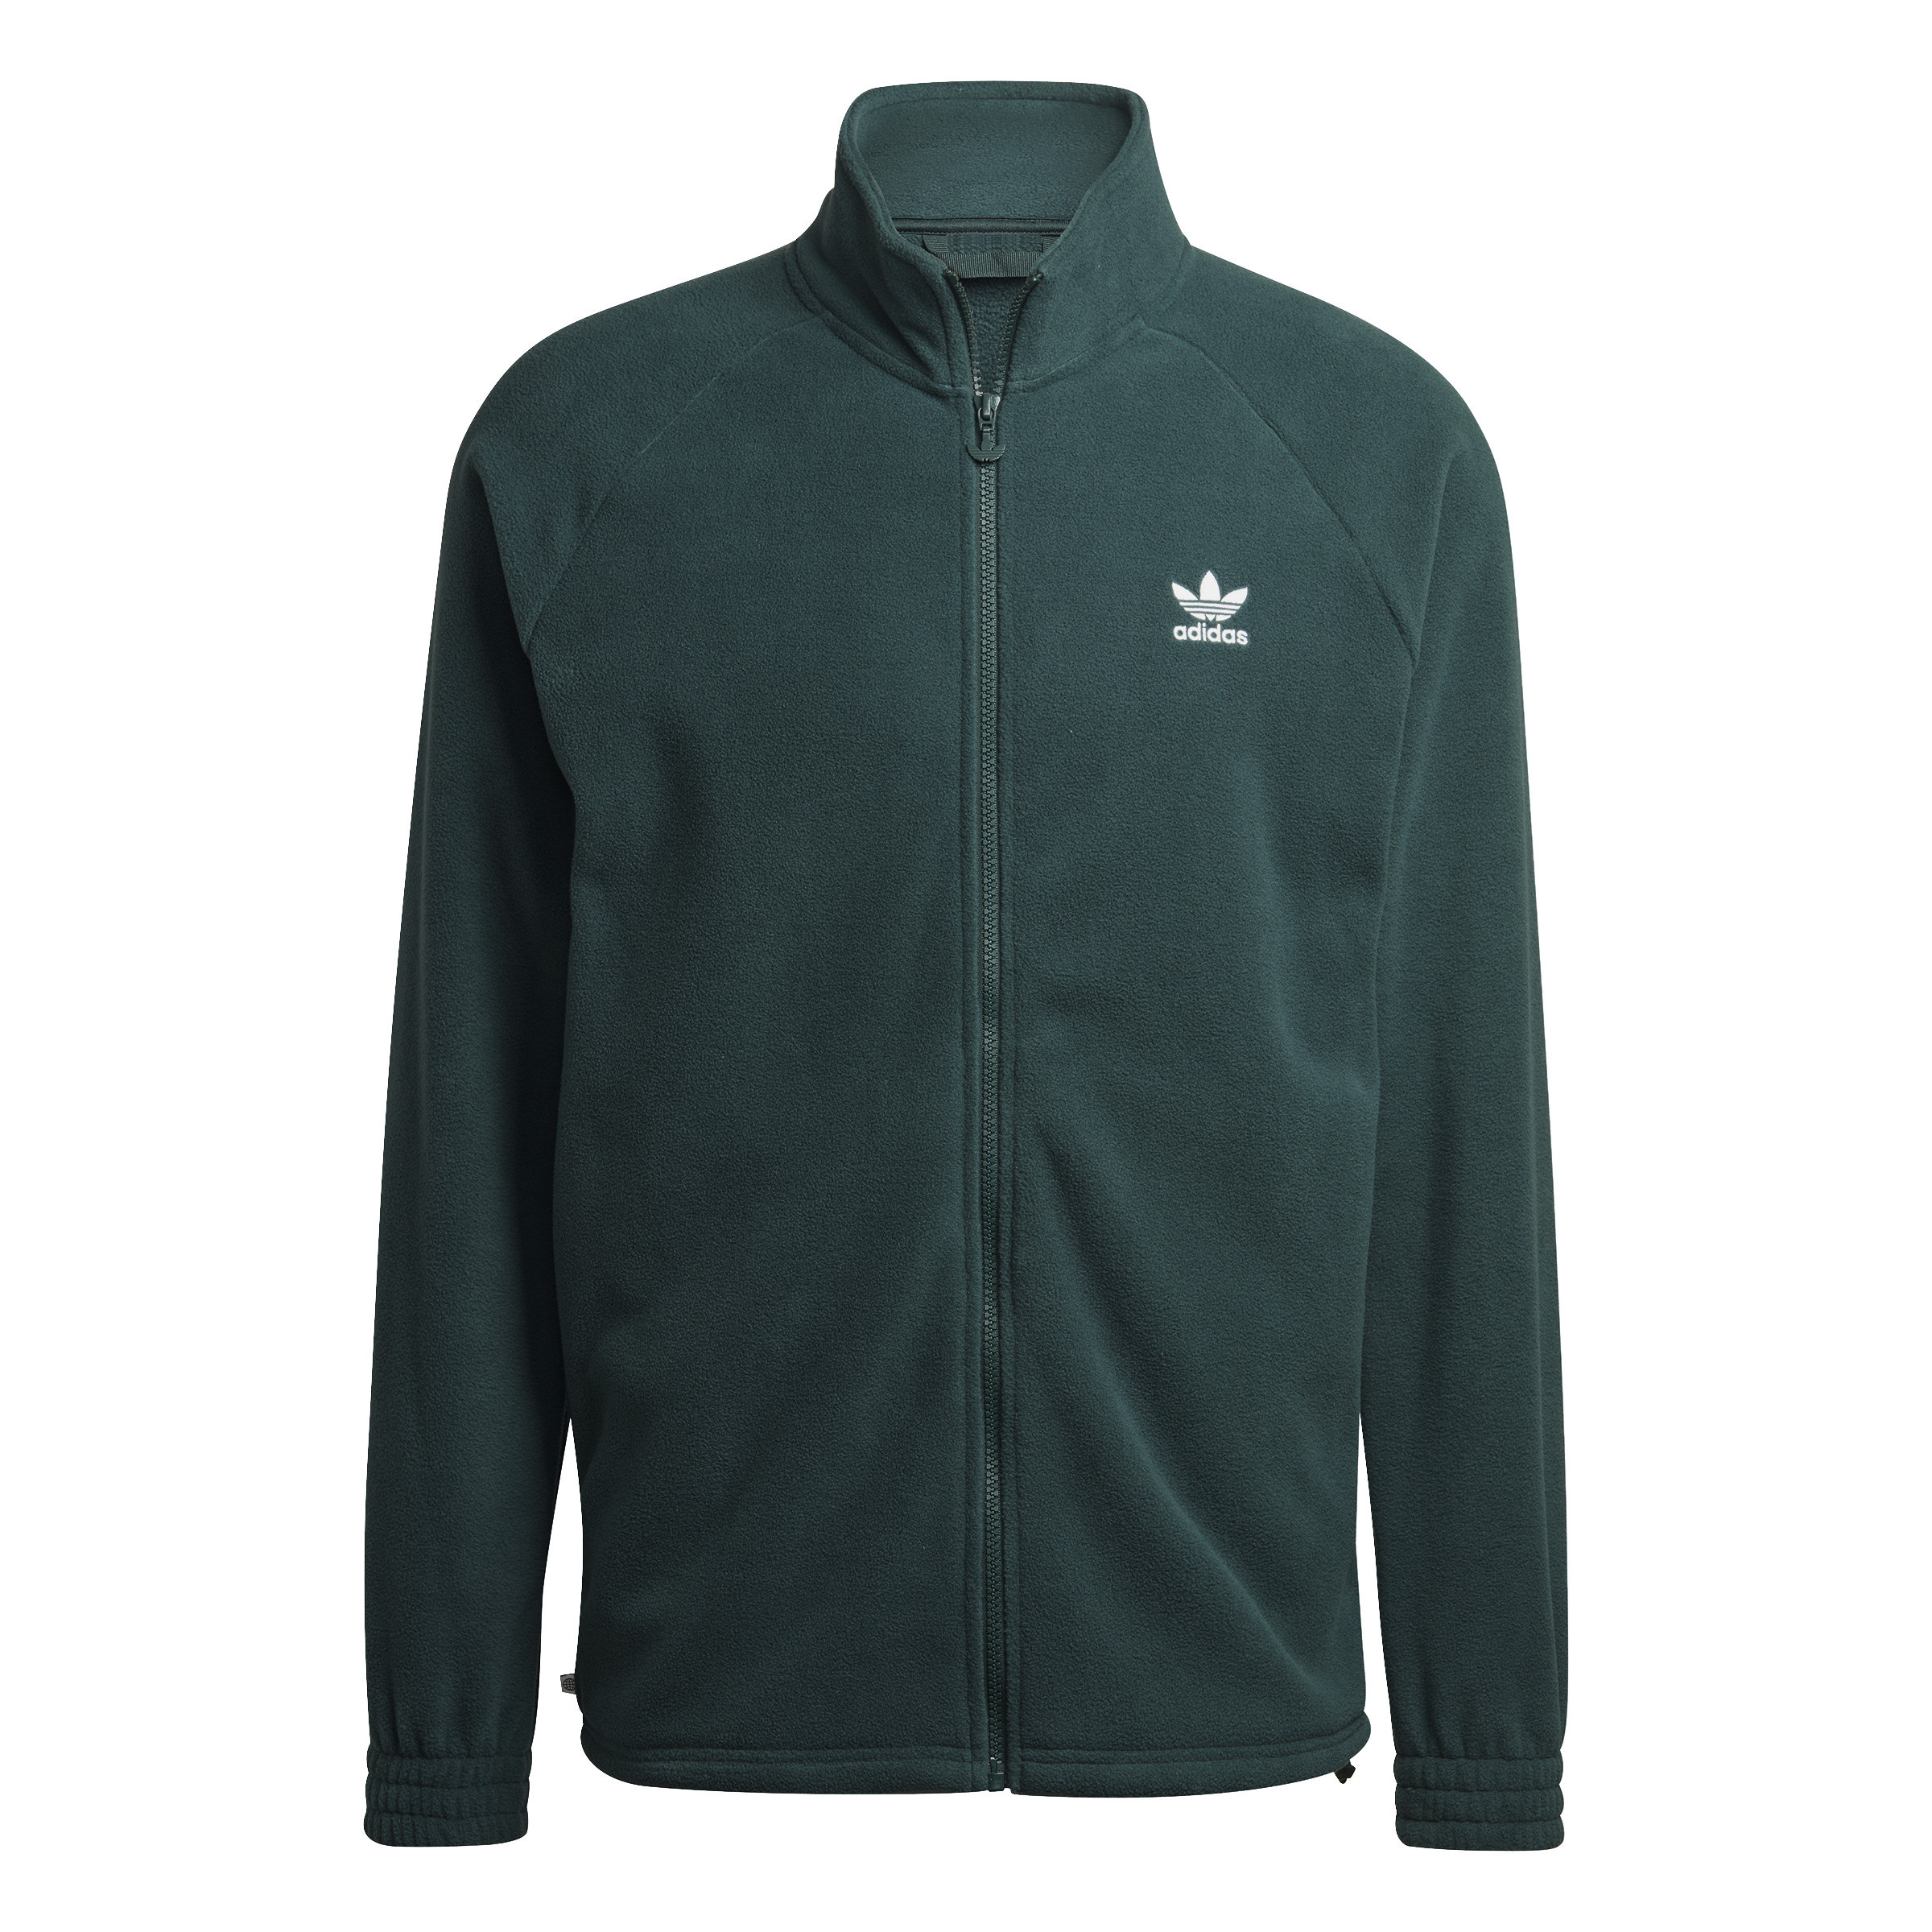 Adidas - Adicolor Classics Trefoil Fleece Jacket, Dark Green, large image number 0